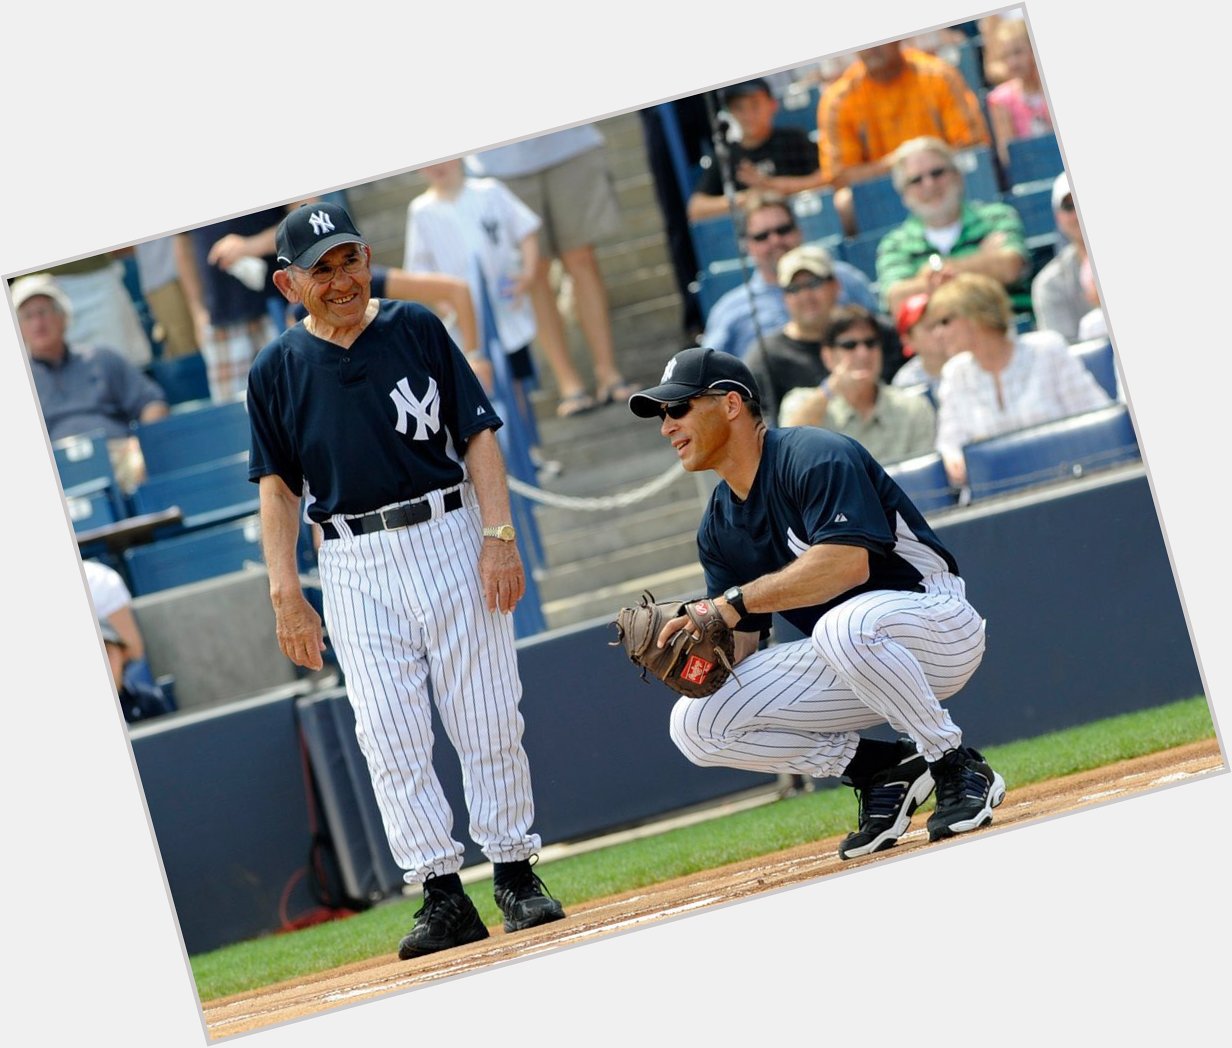 Wishing a very happy birthday to Joe Girardi! Let s go Yankees! 